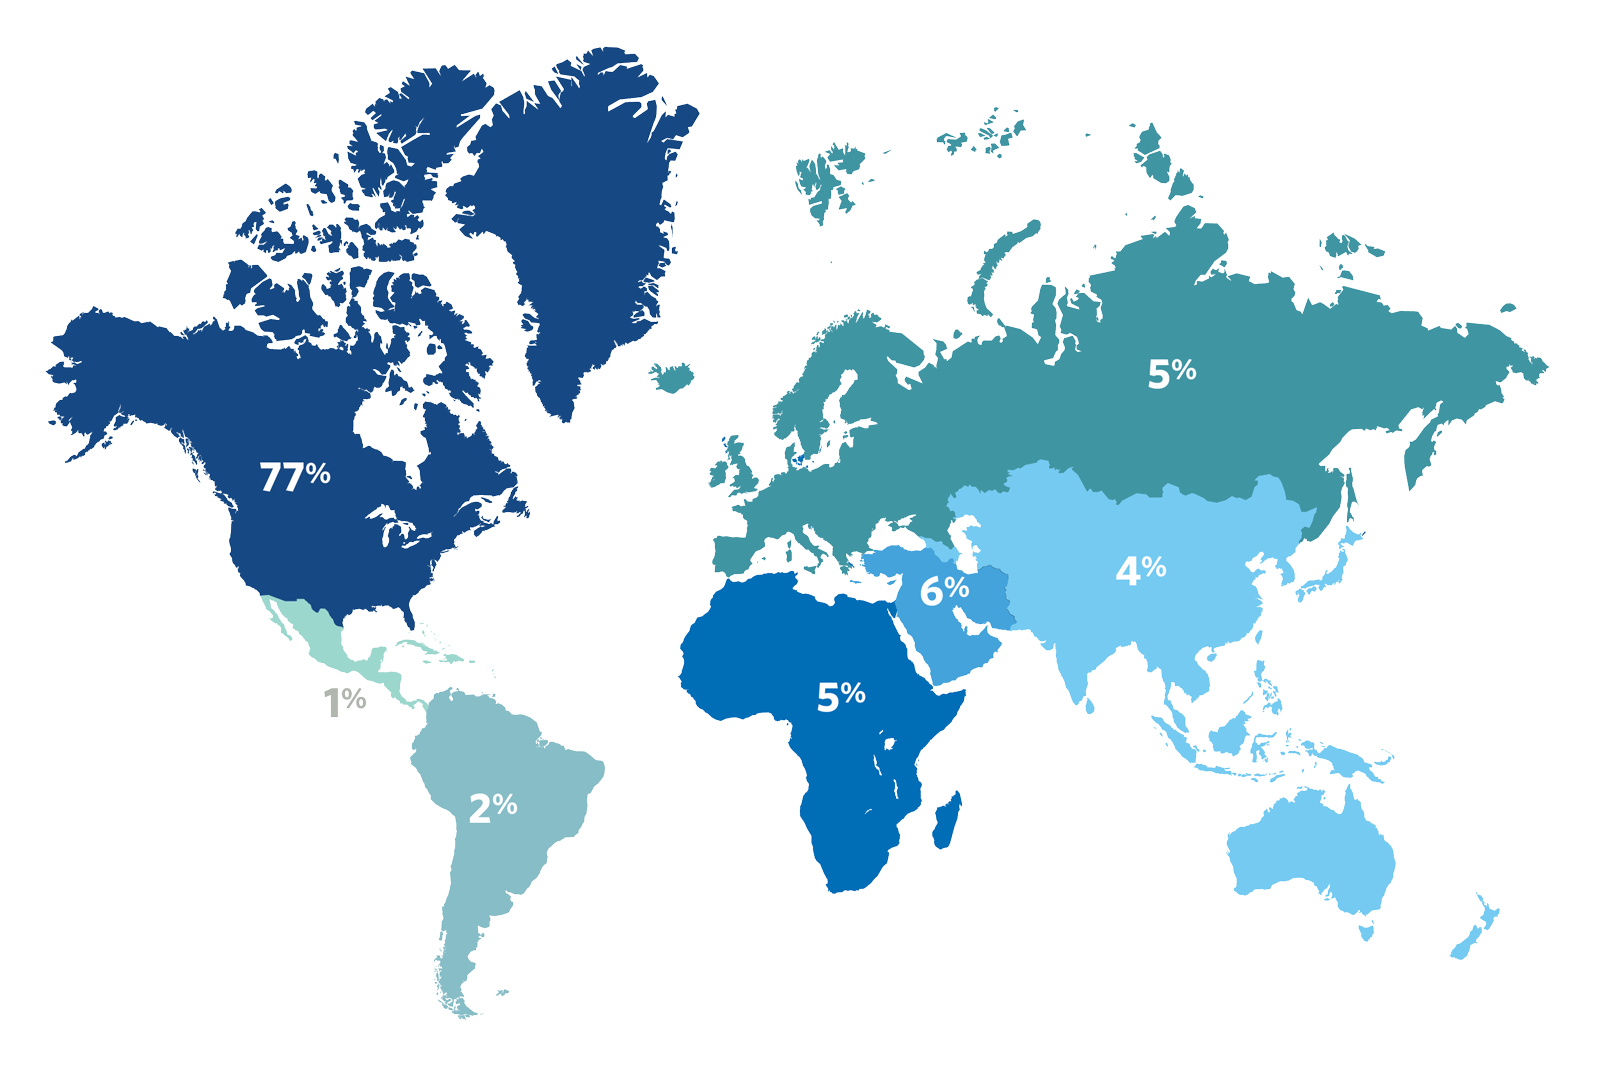 Women’s Executive Leadership participants by region